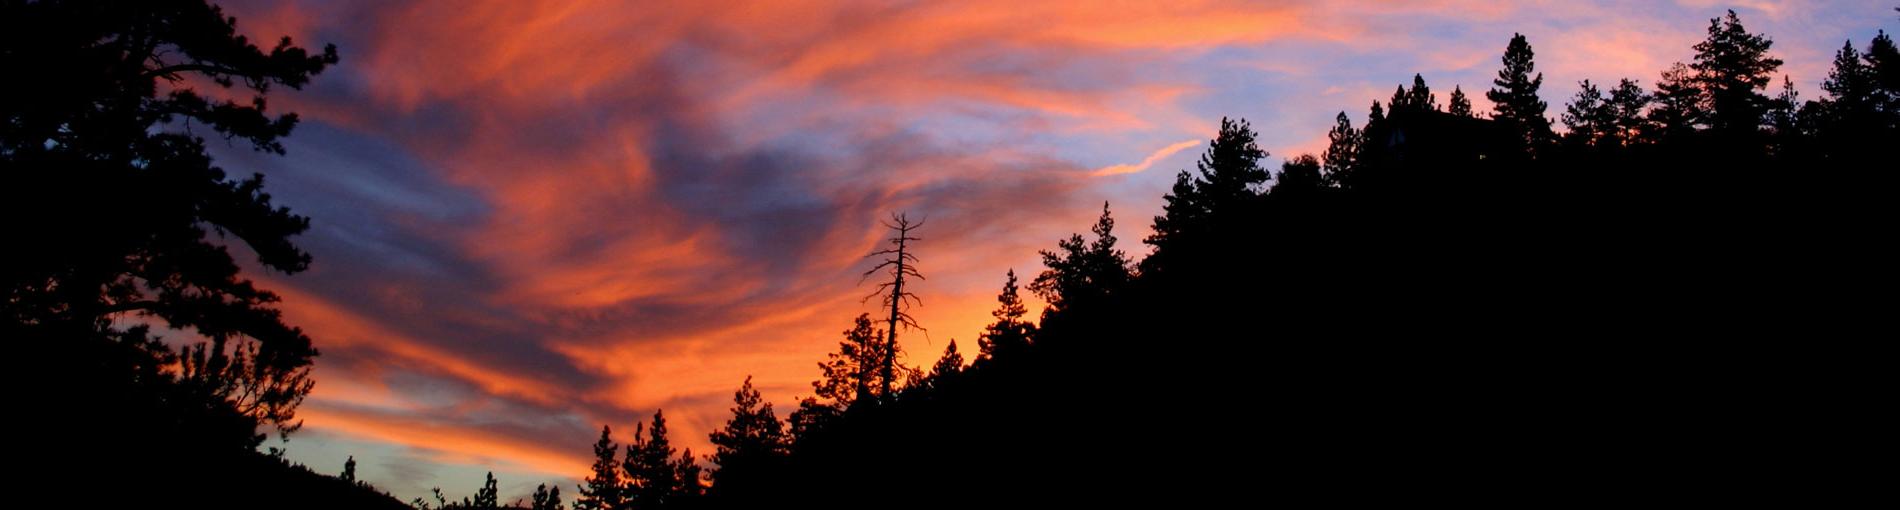 Sunset at Pine Mountain Club - Photo By Richard Benjamin